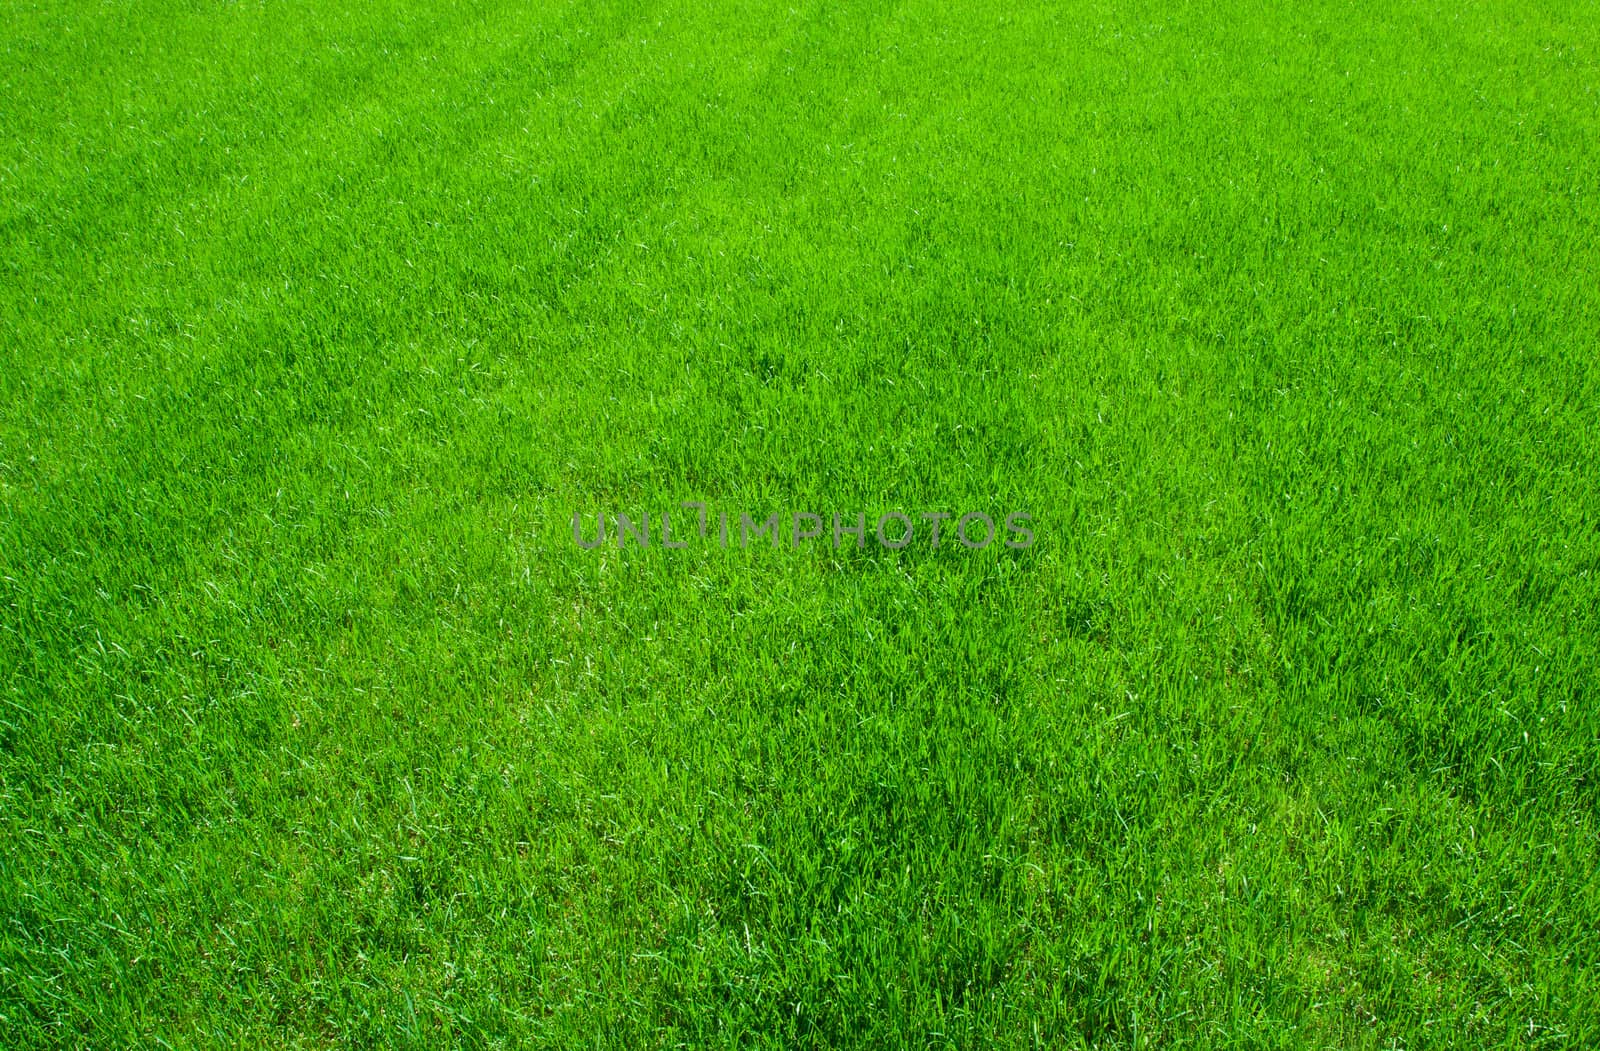 Green lush grass background under bright sunlight